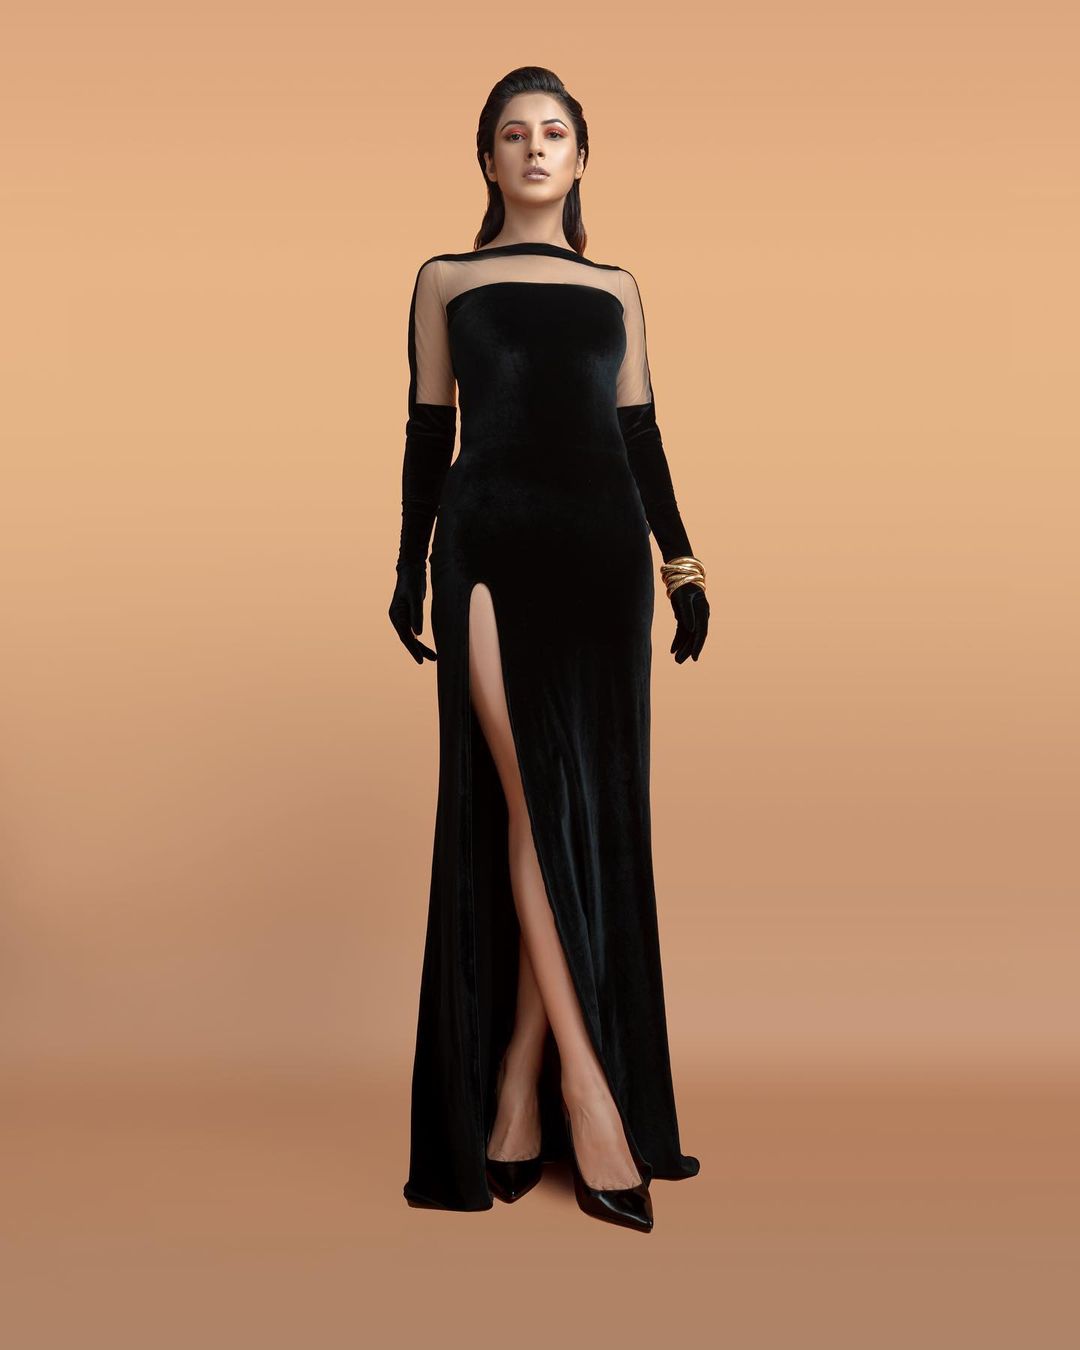 shehnaaz-gill-gorgeous-looks-in-black-dress